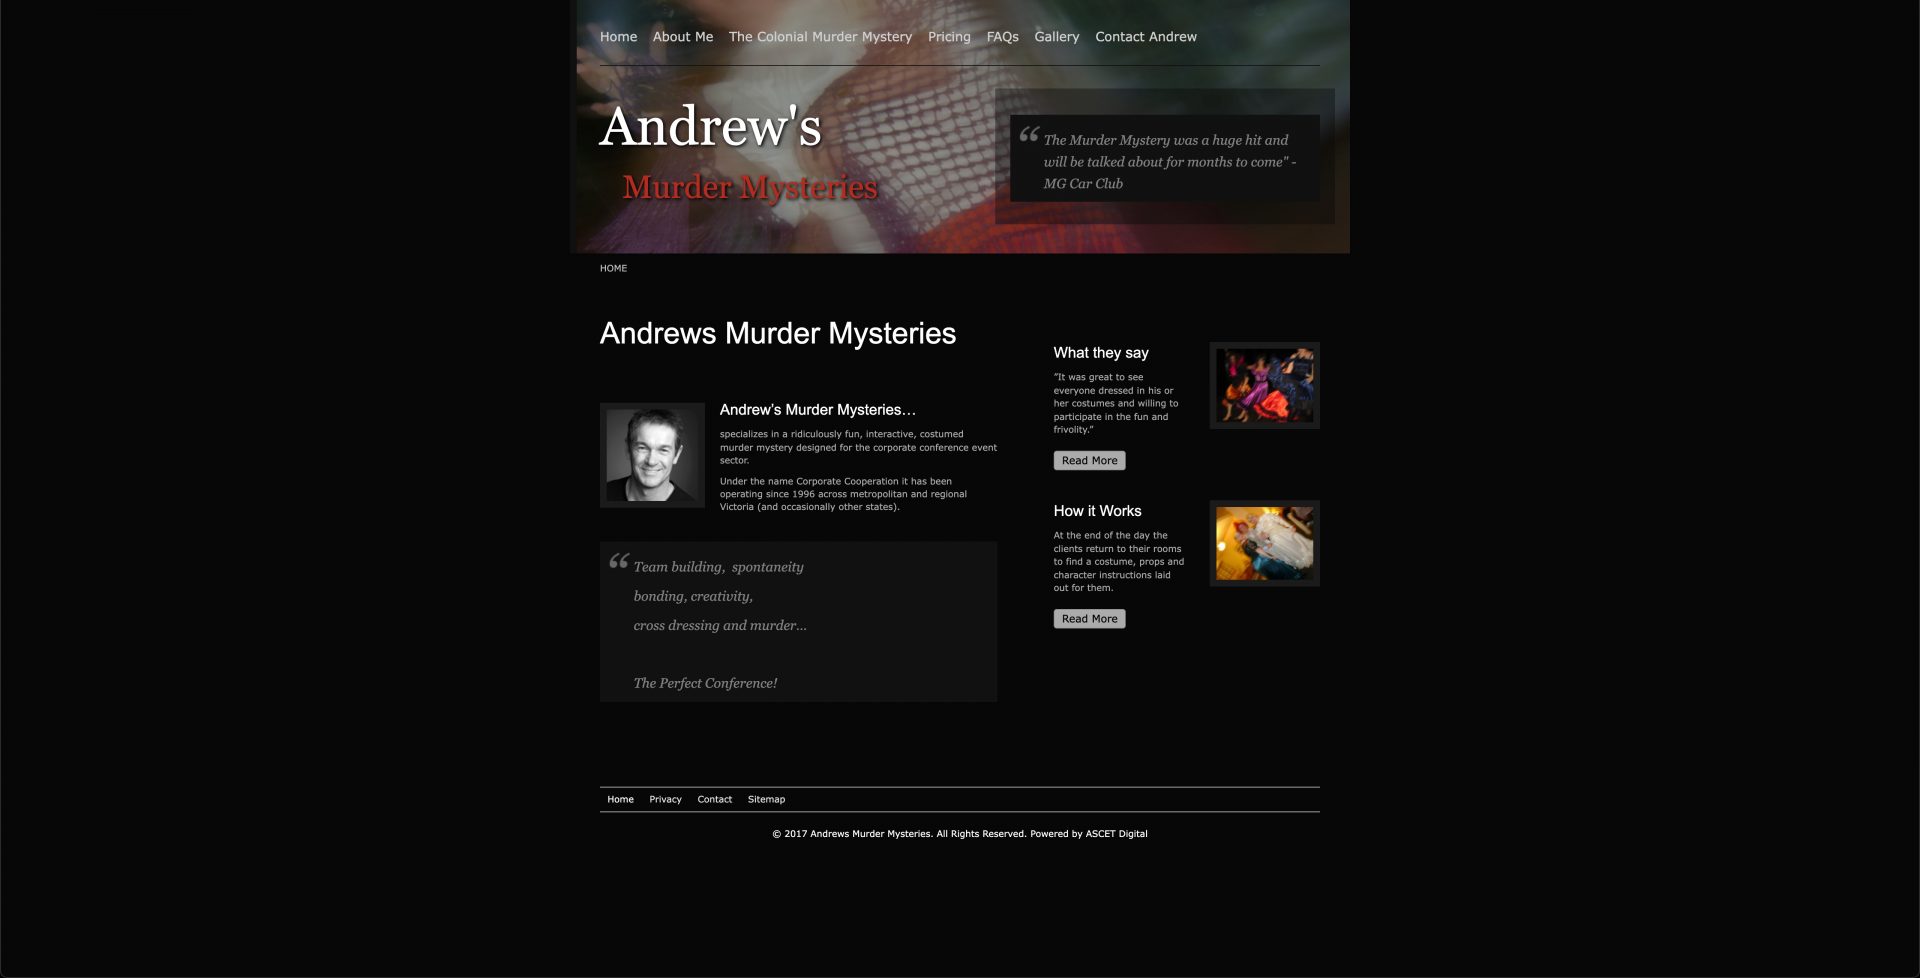 Andrews Murder Mysteries